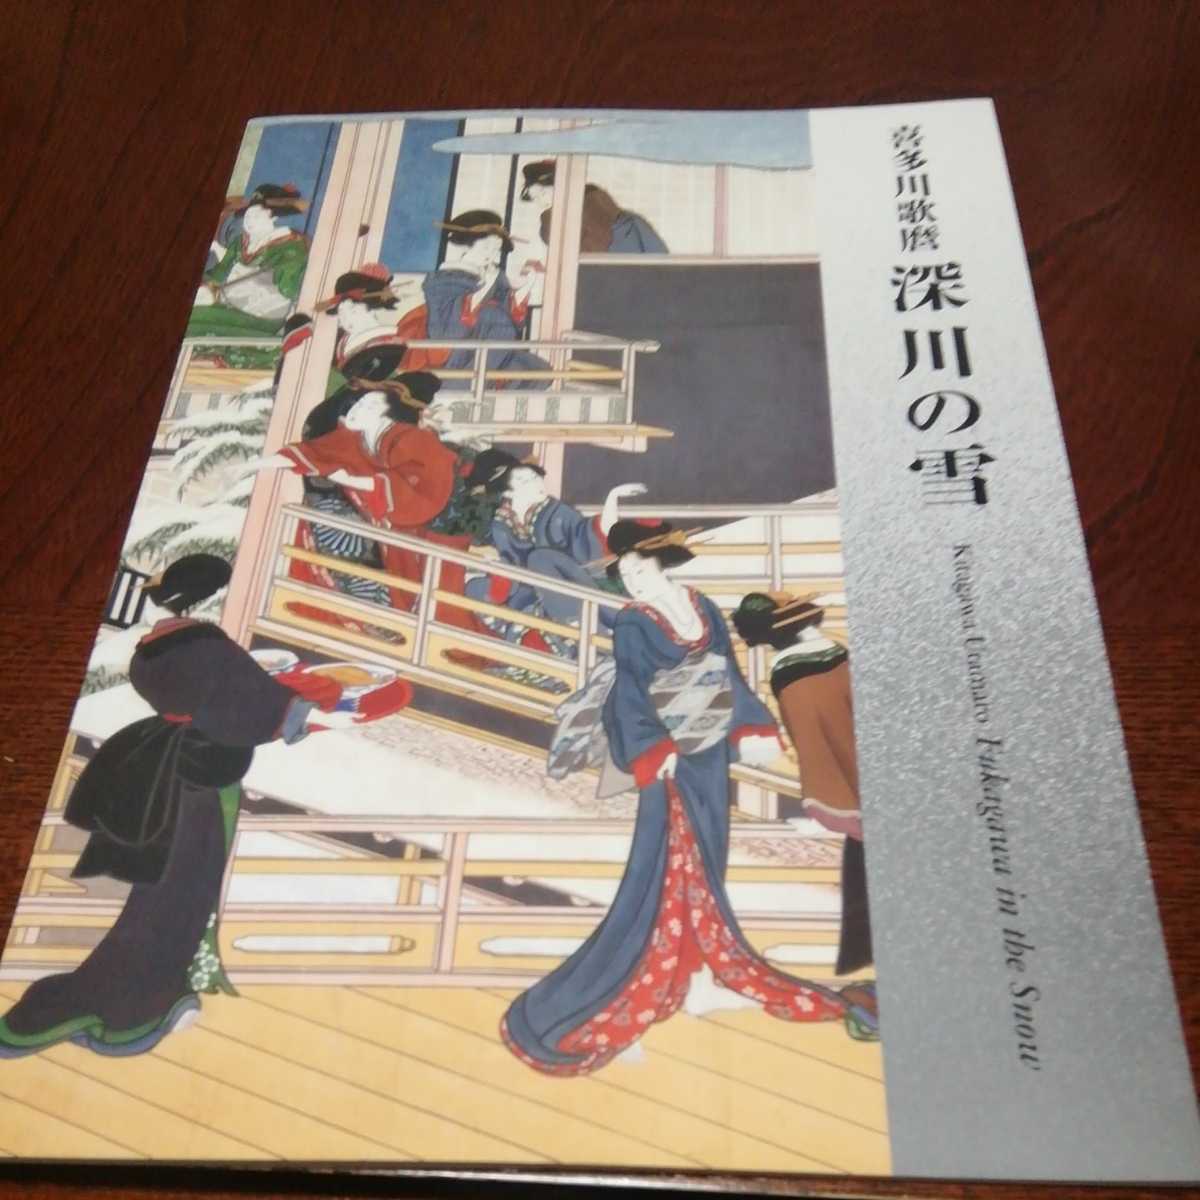 Kitagawa Utamaro: Snow in Fukagawa Okada Museum of Art, Painting, Ukiyo-e, Prints, Portrait of a beautiful woman